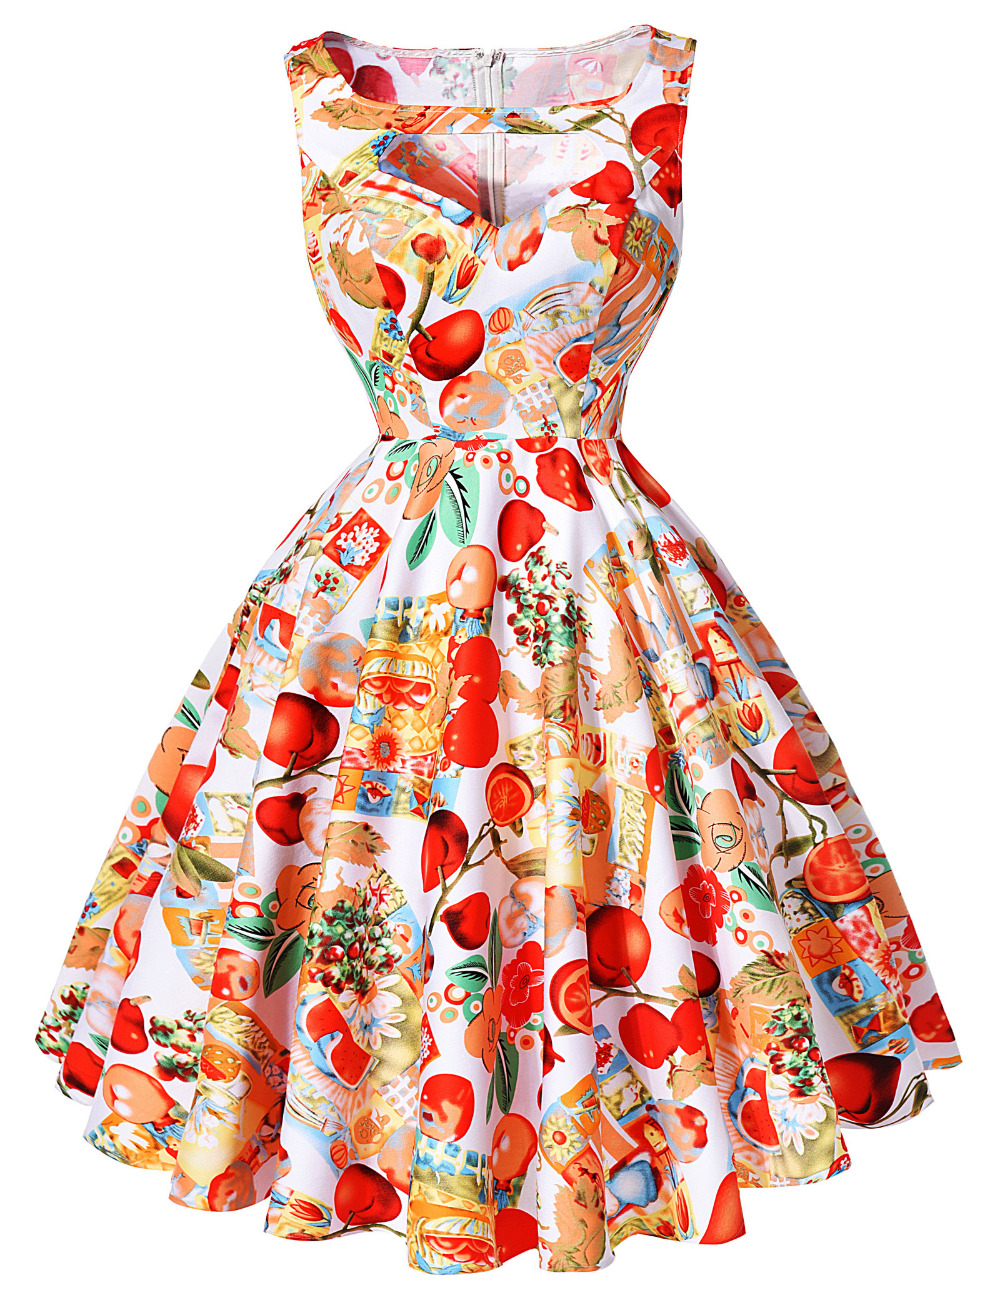 Sleeveless Cotton 50s 60s Vintage Rockabilly Dresses 2016 Hollowed Front Design Short Retro